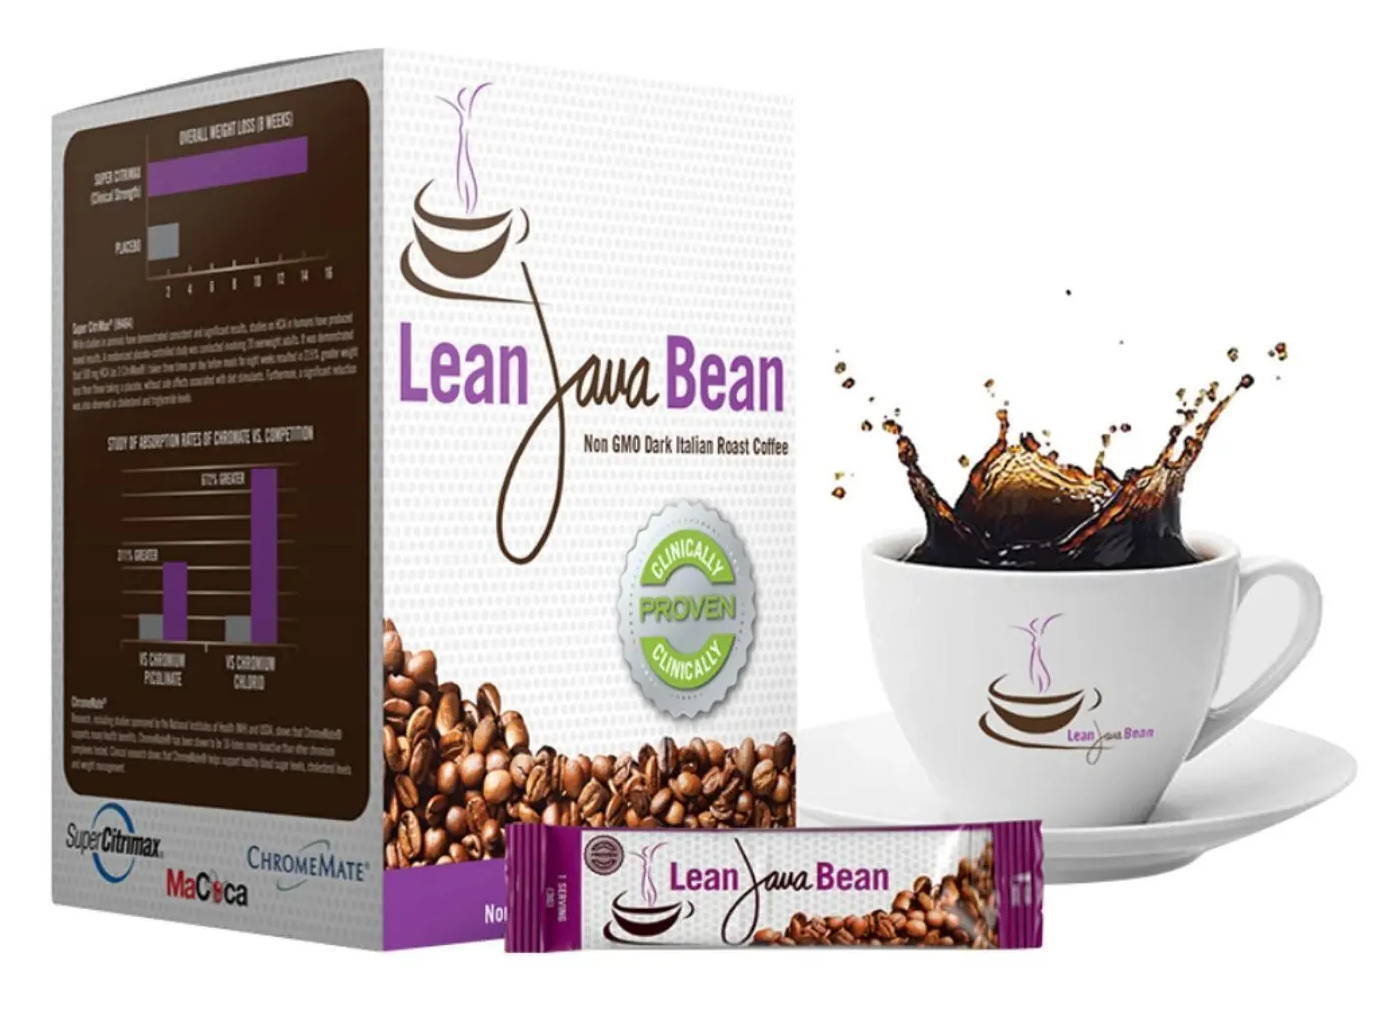 lean java bean box and coffee cup